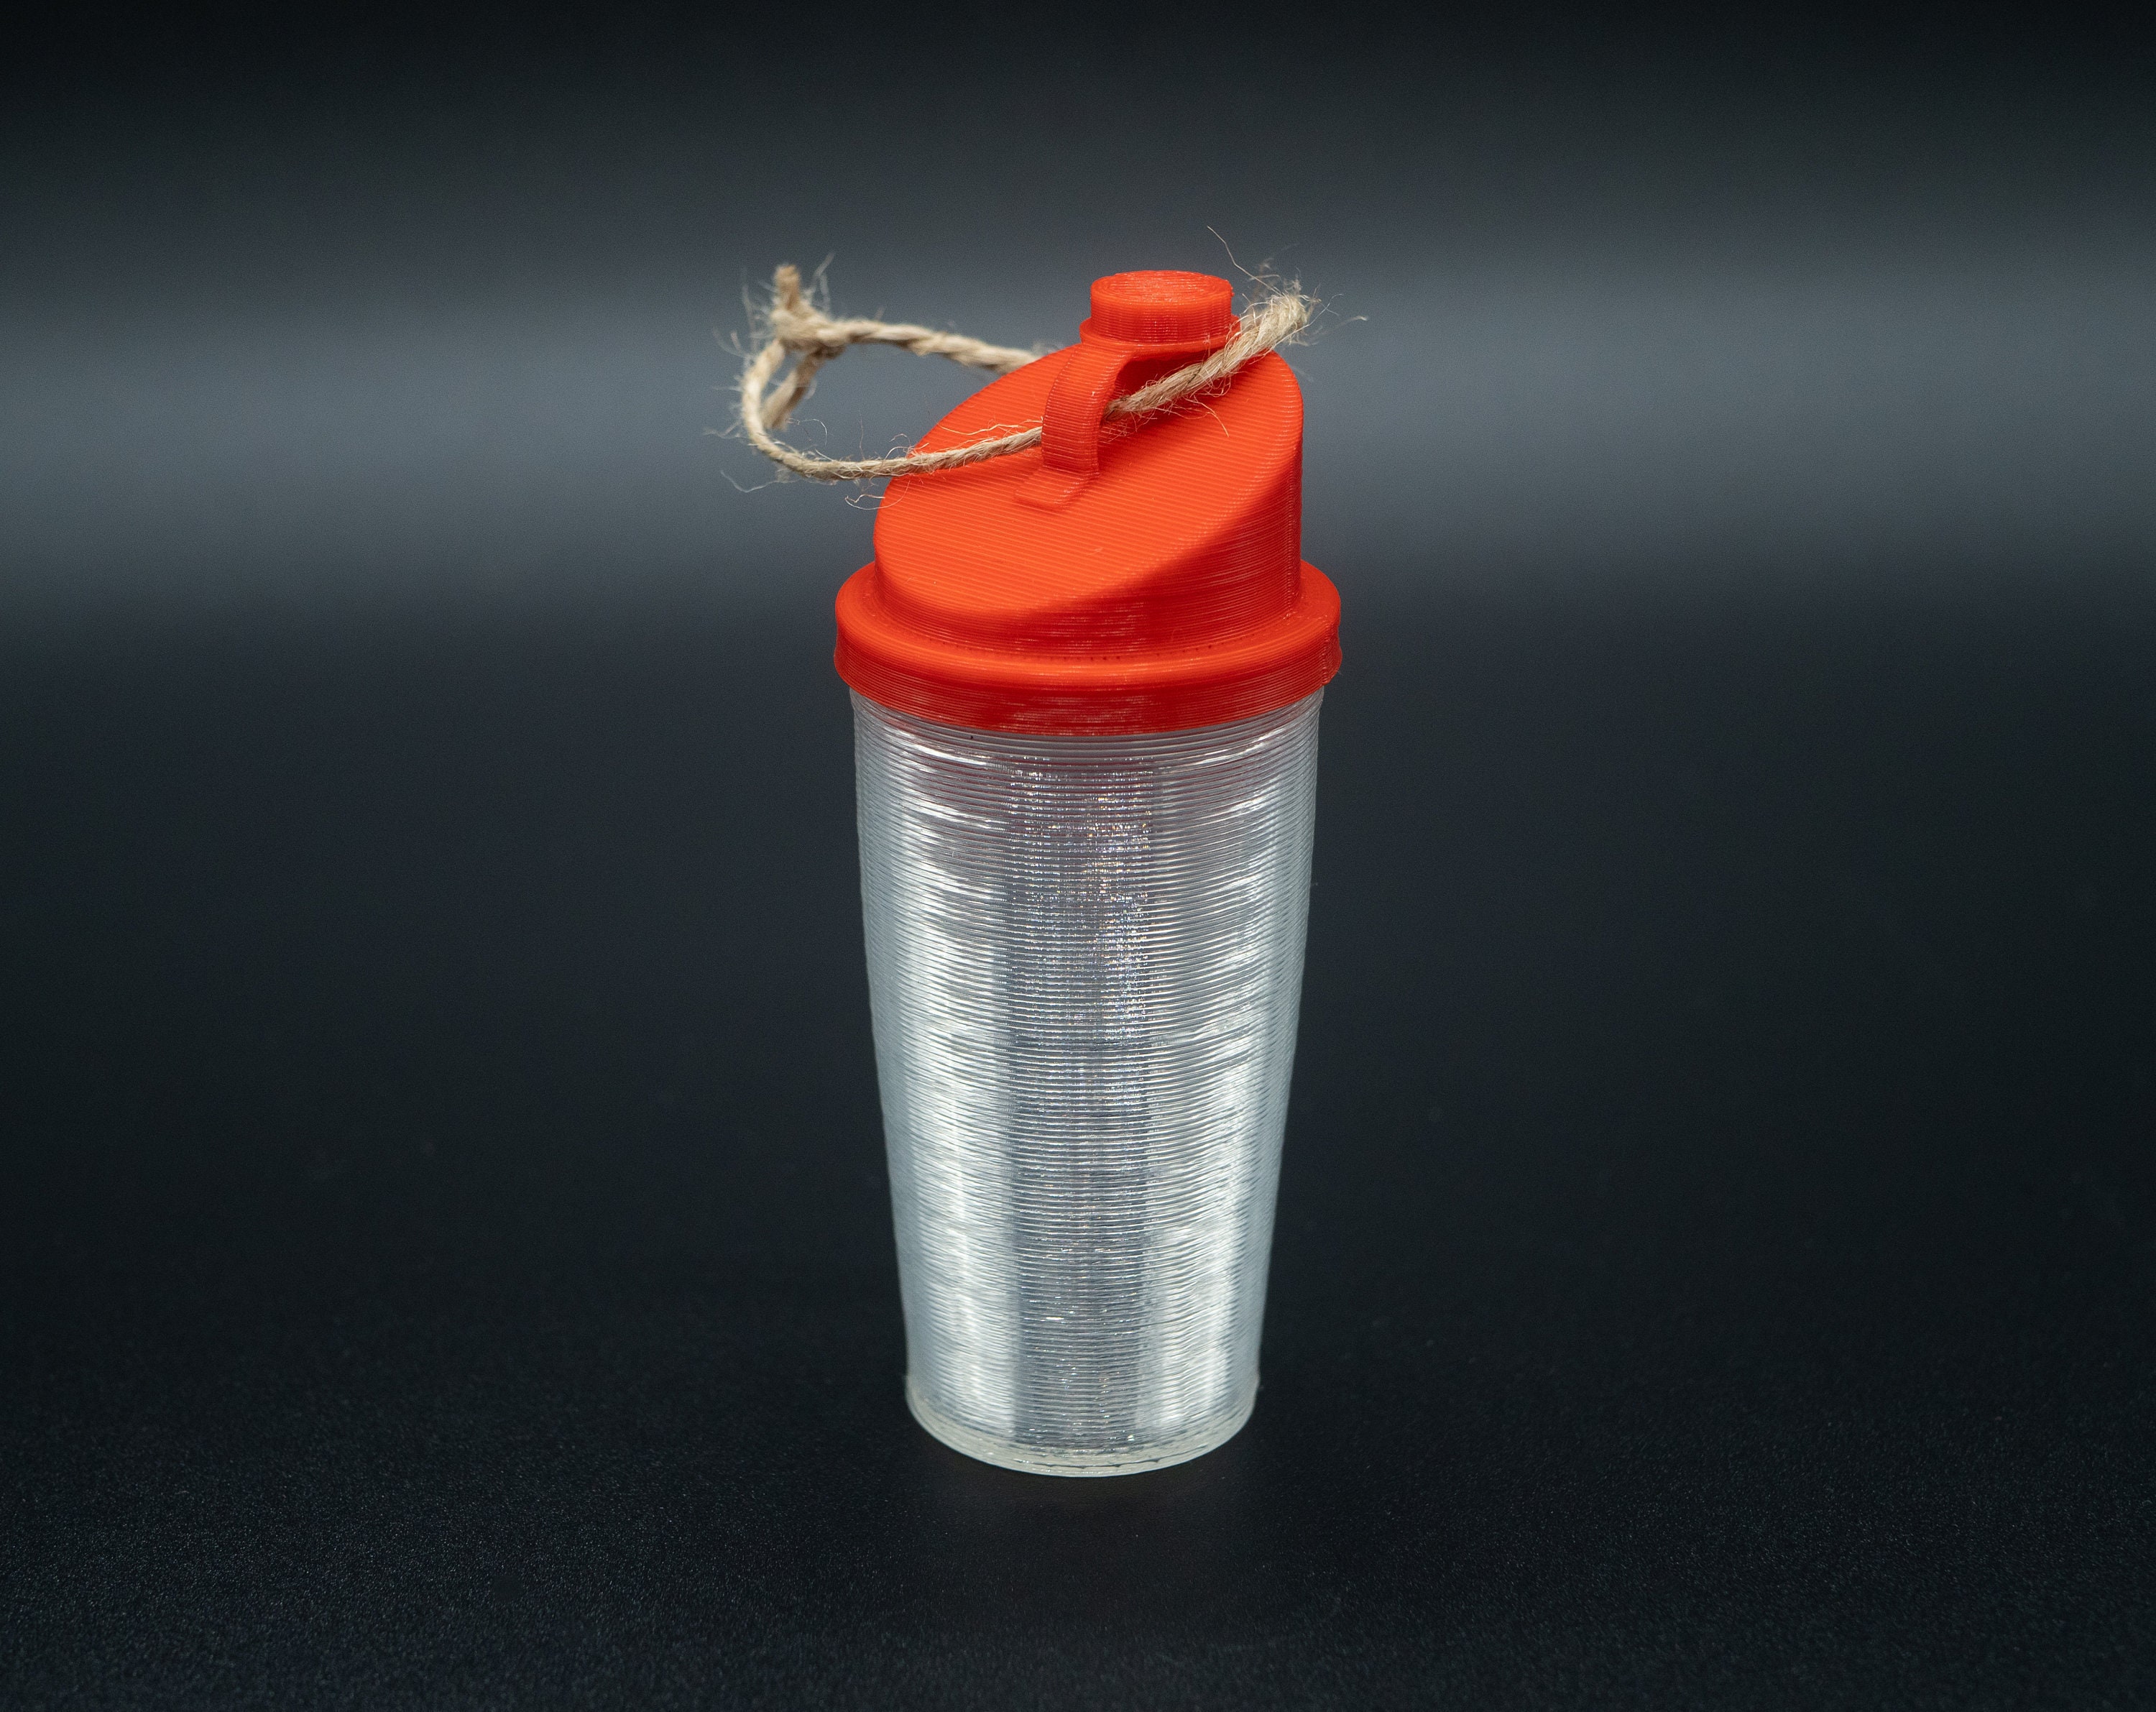 Perfectly Imperfect Smartshake Shaker Bottle with Motivational